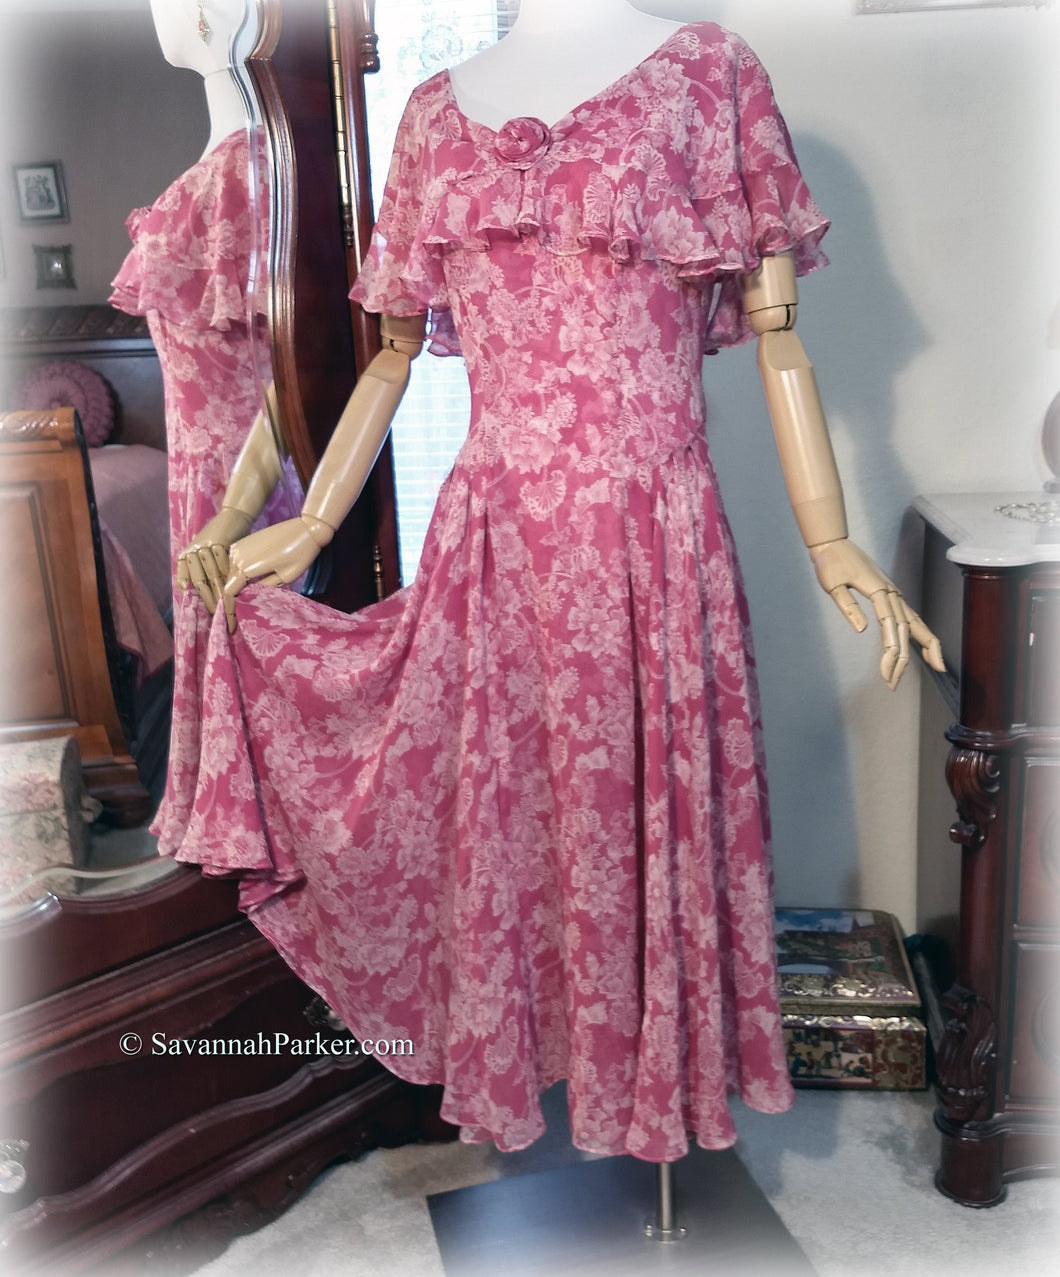 SOLD Fabulous Vintage 20s-30s Inspired Silk Chiffon Designer Nancy Johnson Raspberry Rose Pink Super Feminine Garden Party Dress